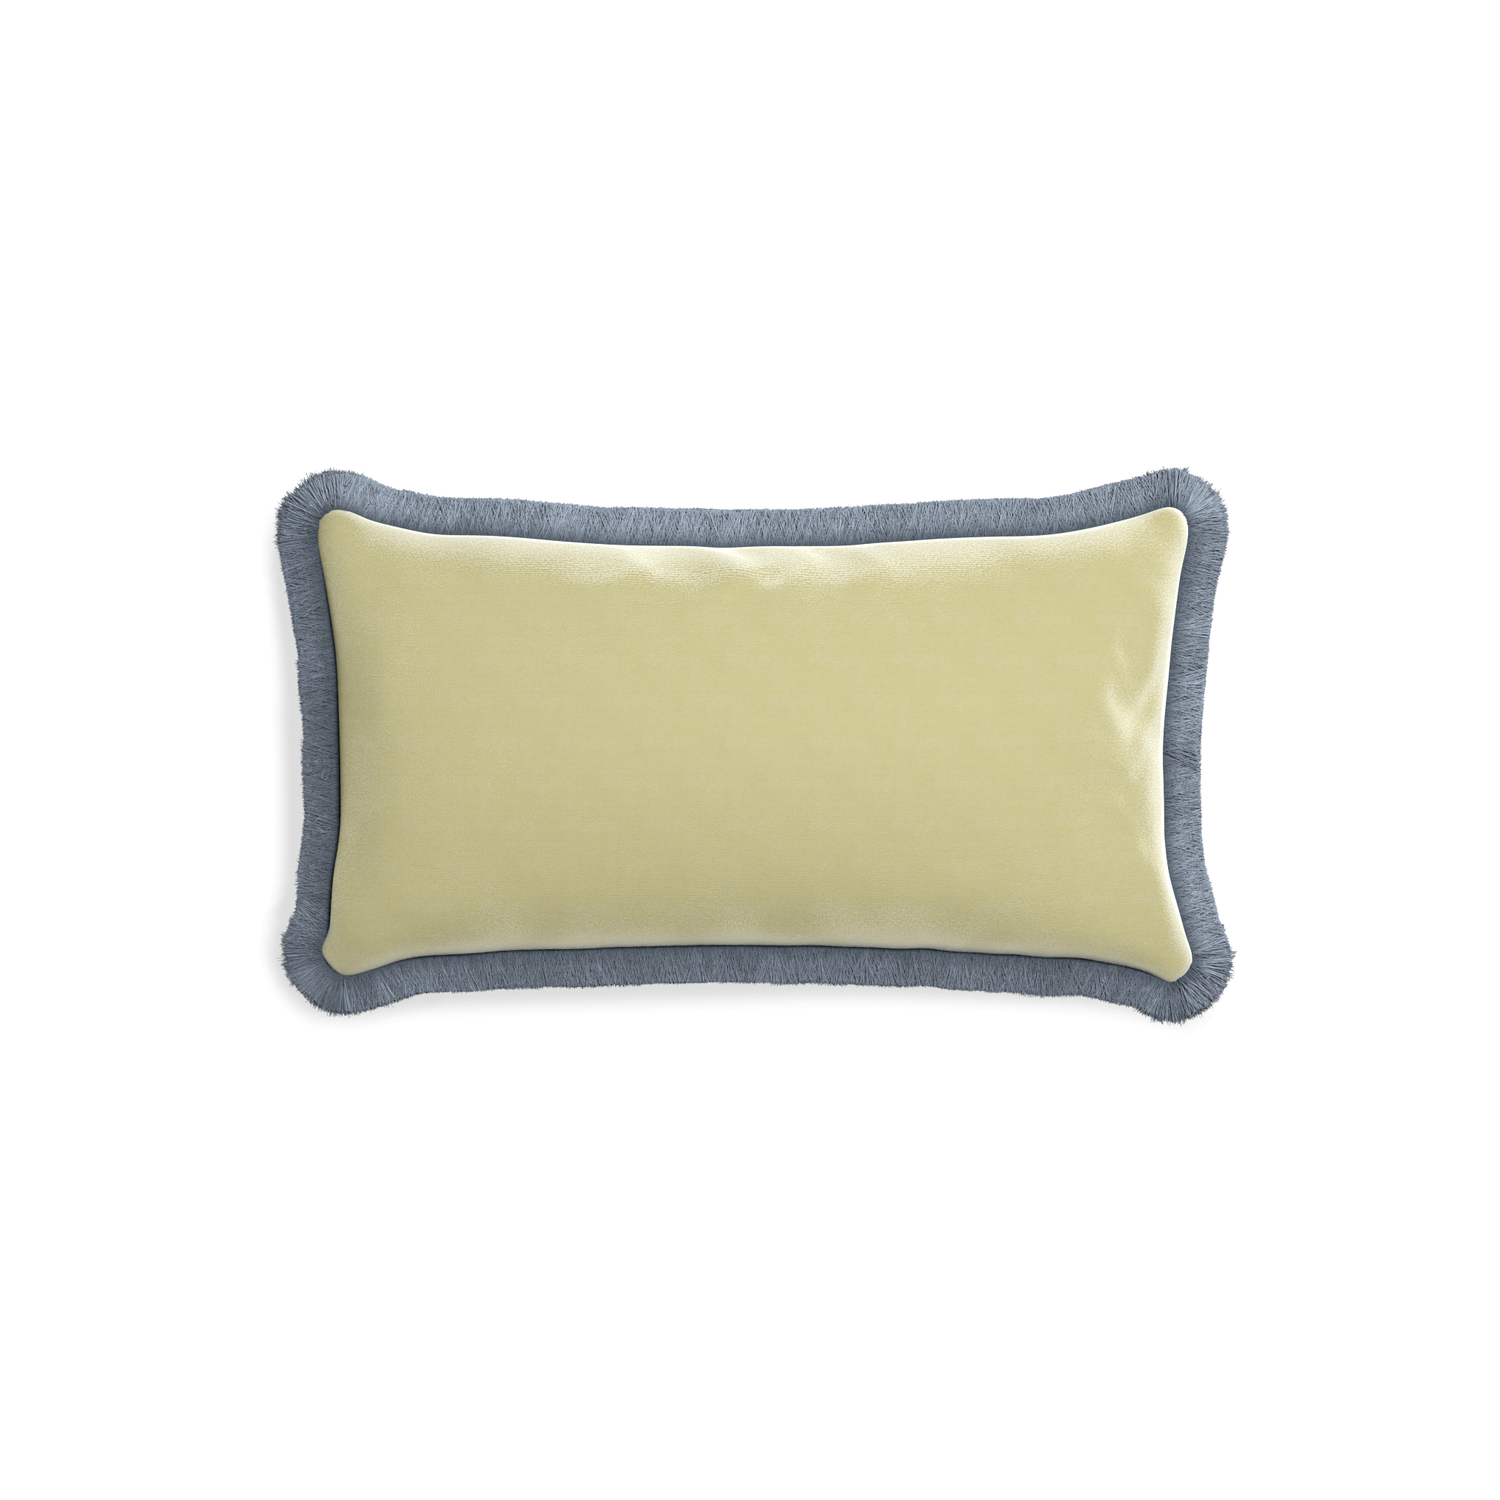 rectangle light green pillow with sky blue fringe